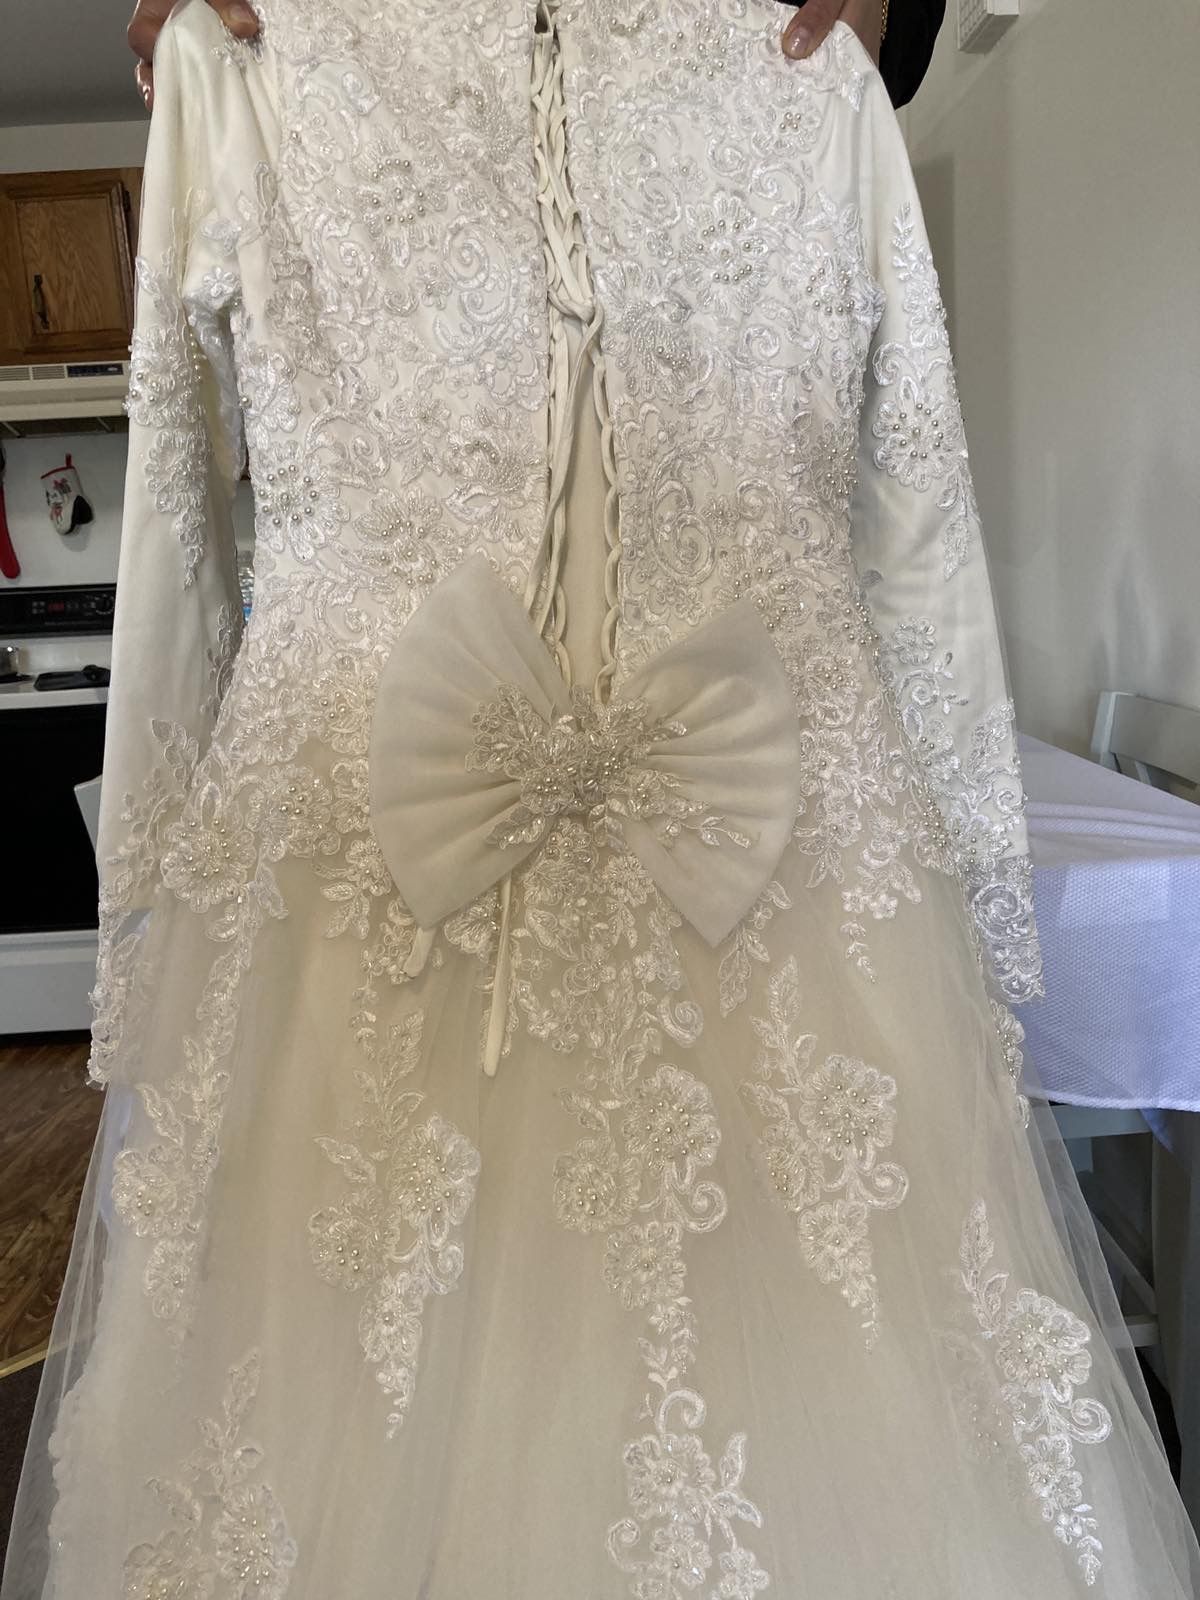  Size small And medium Wedding dress